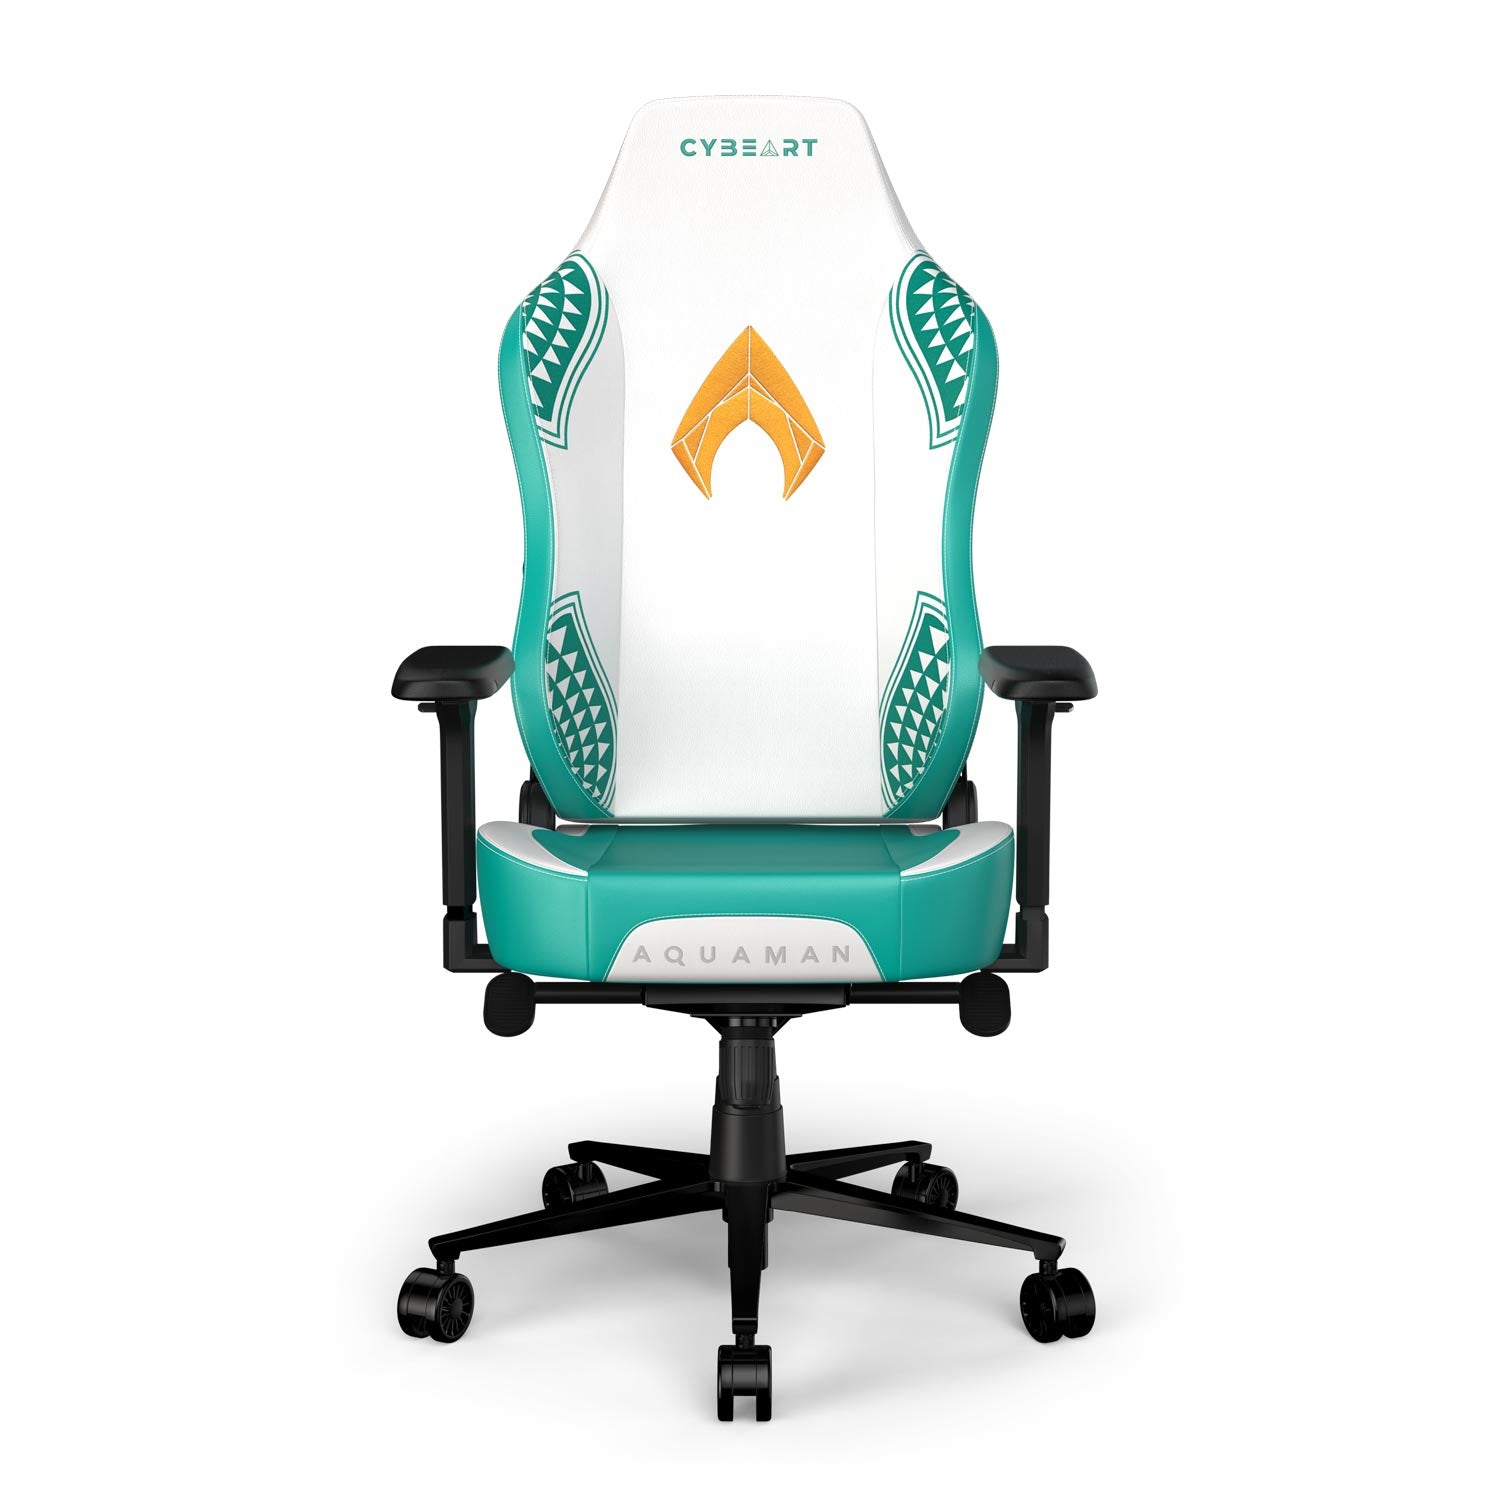 CYBEART | Aquaman Gaming/Office Chair - DC Comics | 4D Armrest | Inbuilt Lumbar Support | Supreme PU Leather, Ergonomic, Recline & Tilt